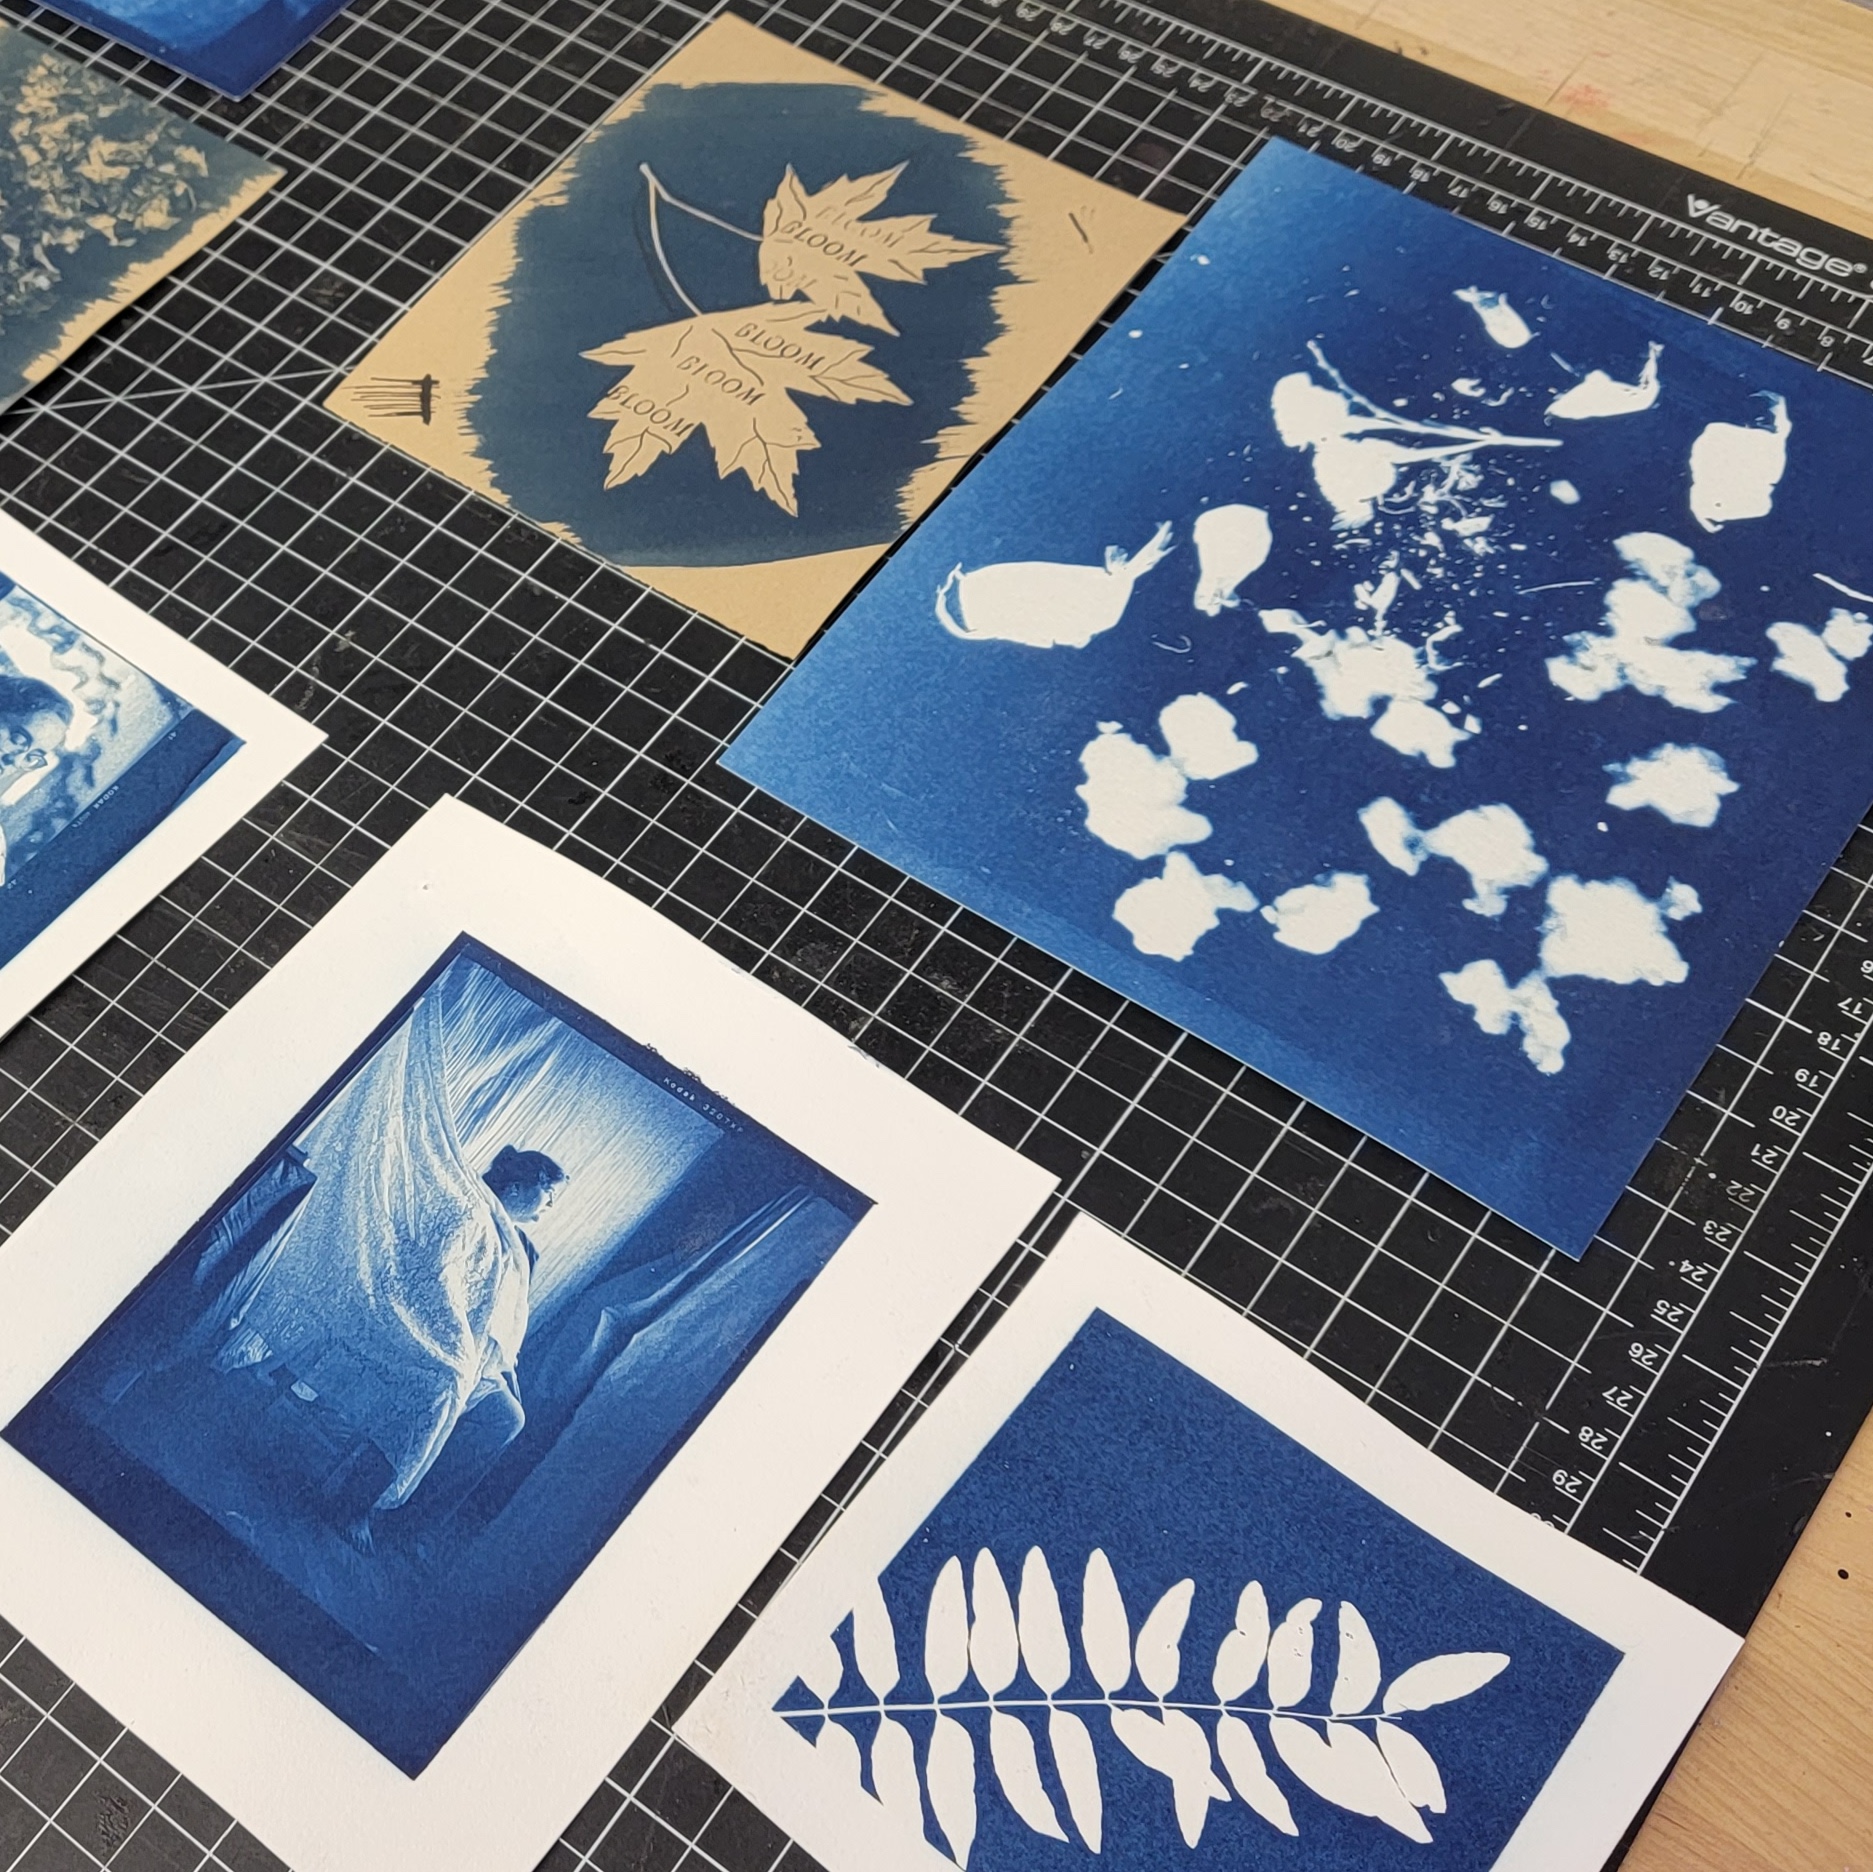 array of cyanotypes including botanical prints and photo negatives